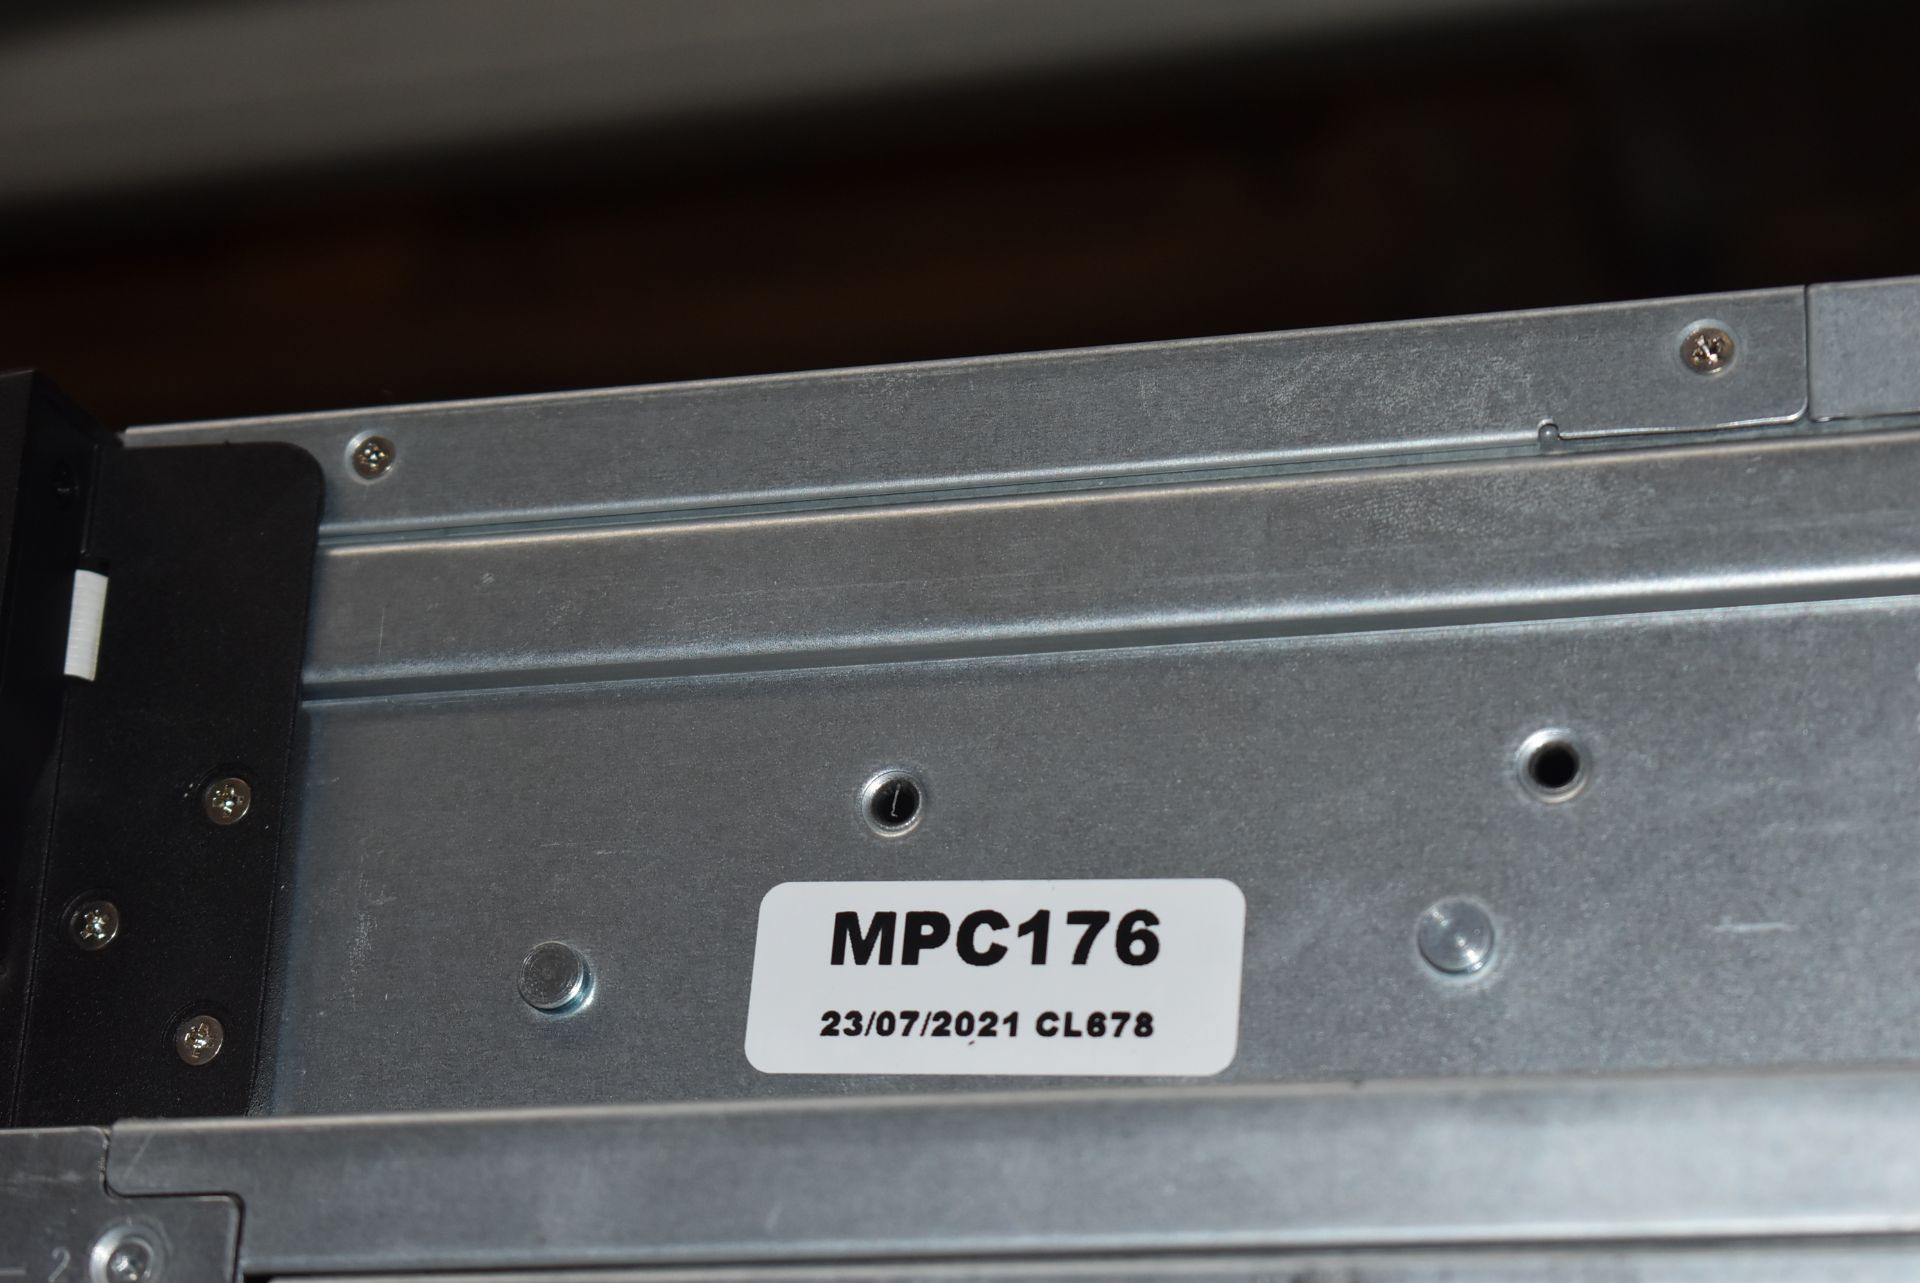 1 x QNAP 8 Bay 2u NAS Storage Device - Model TS-879U-RP - RRP £1,500 - Ref: MPC176 CA - CL678 - - Image 11 of 11